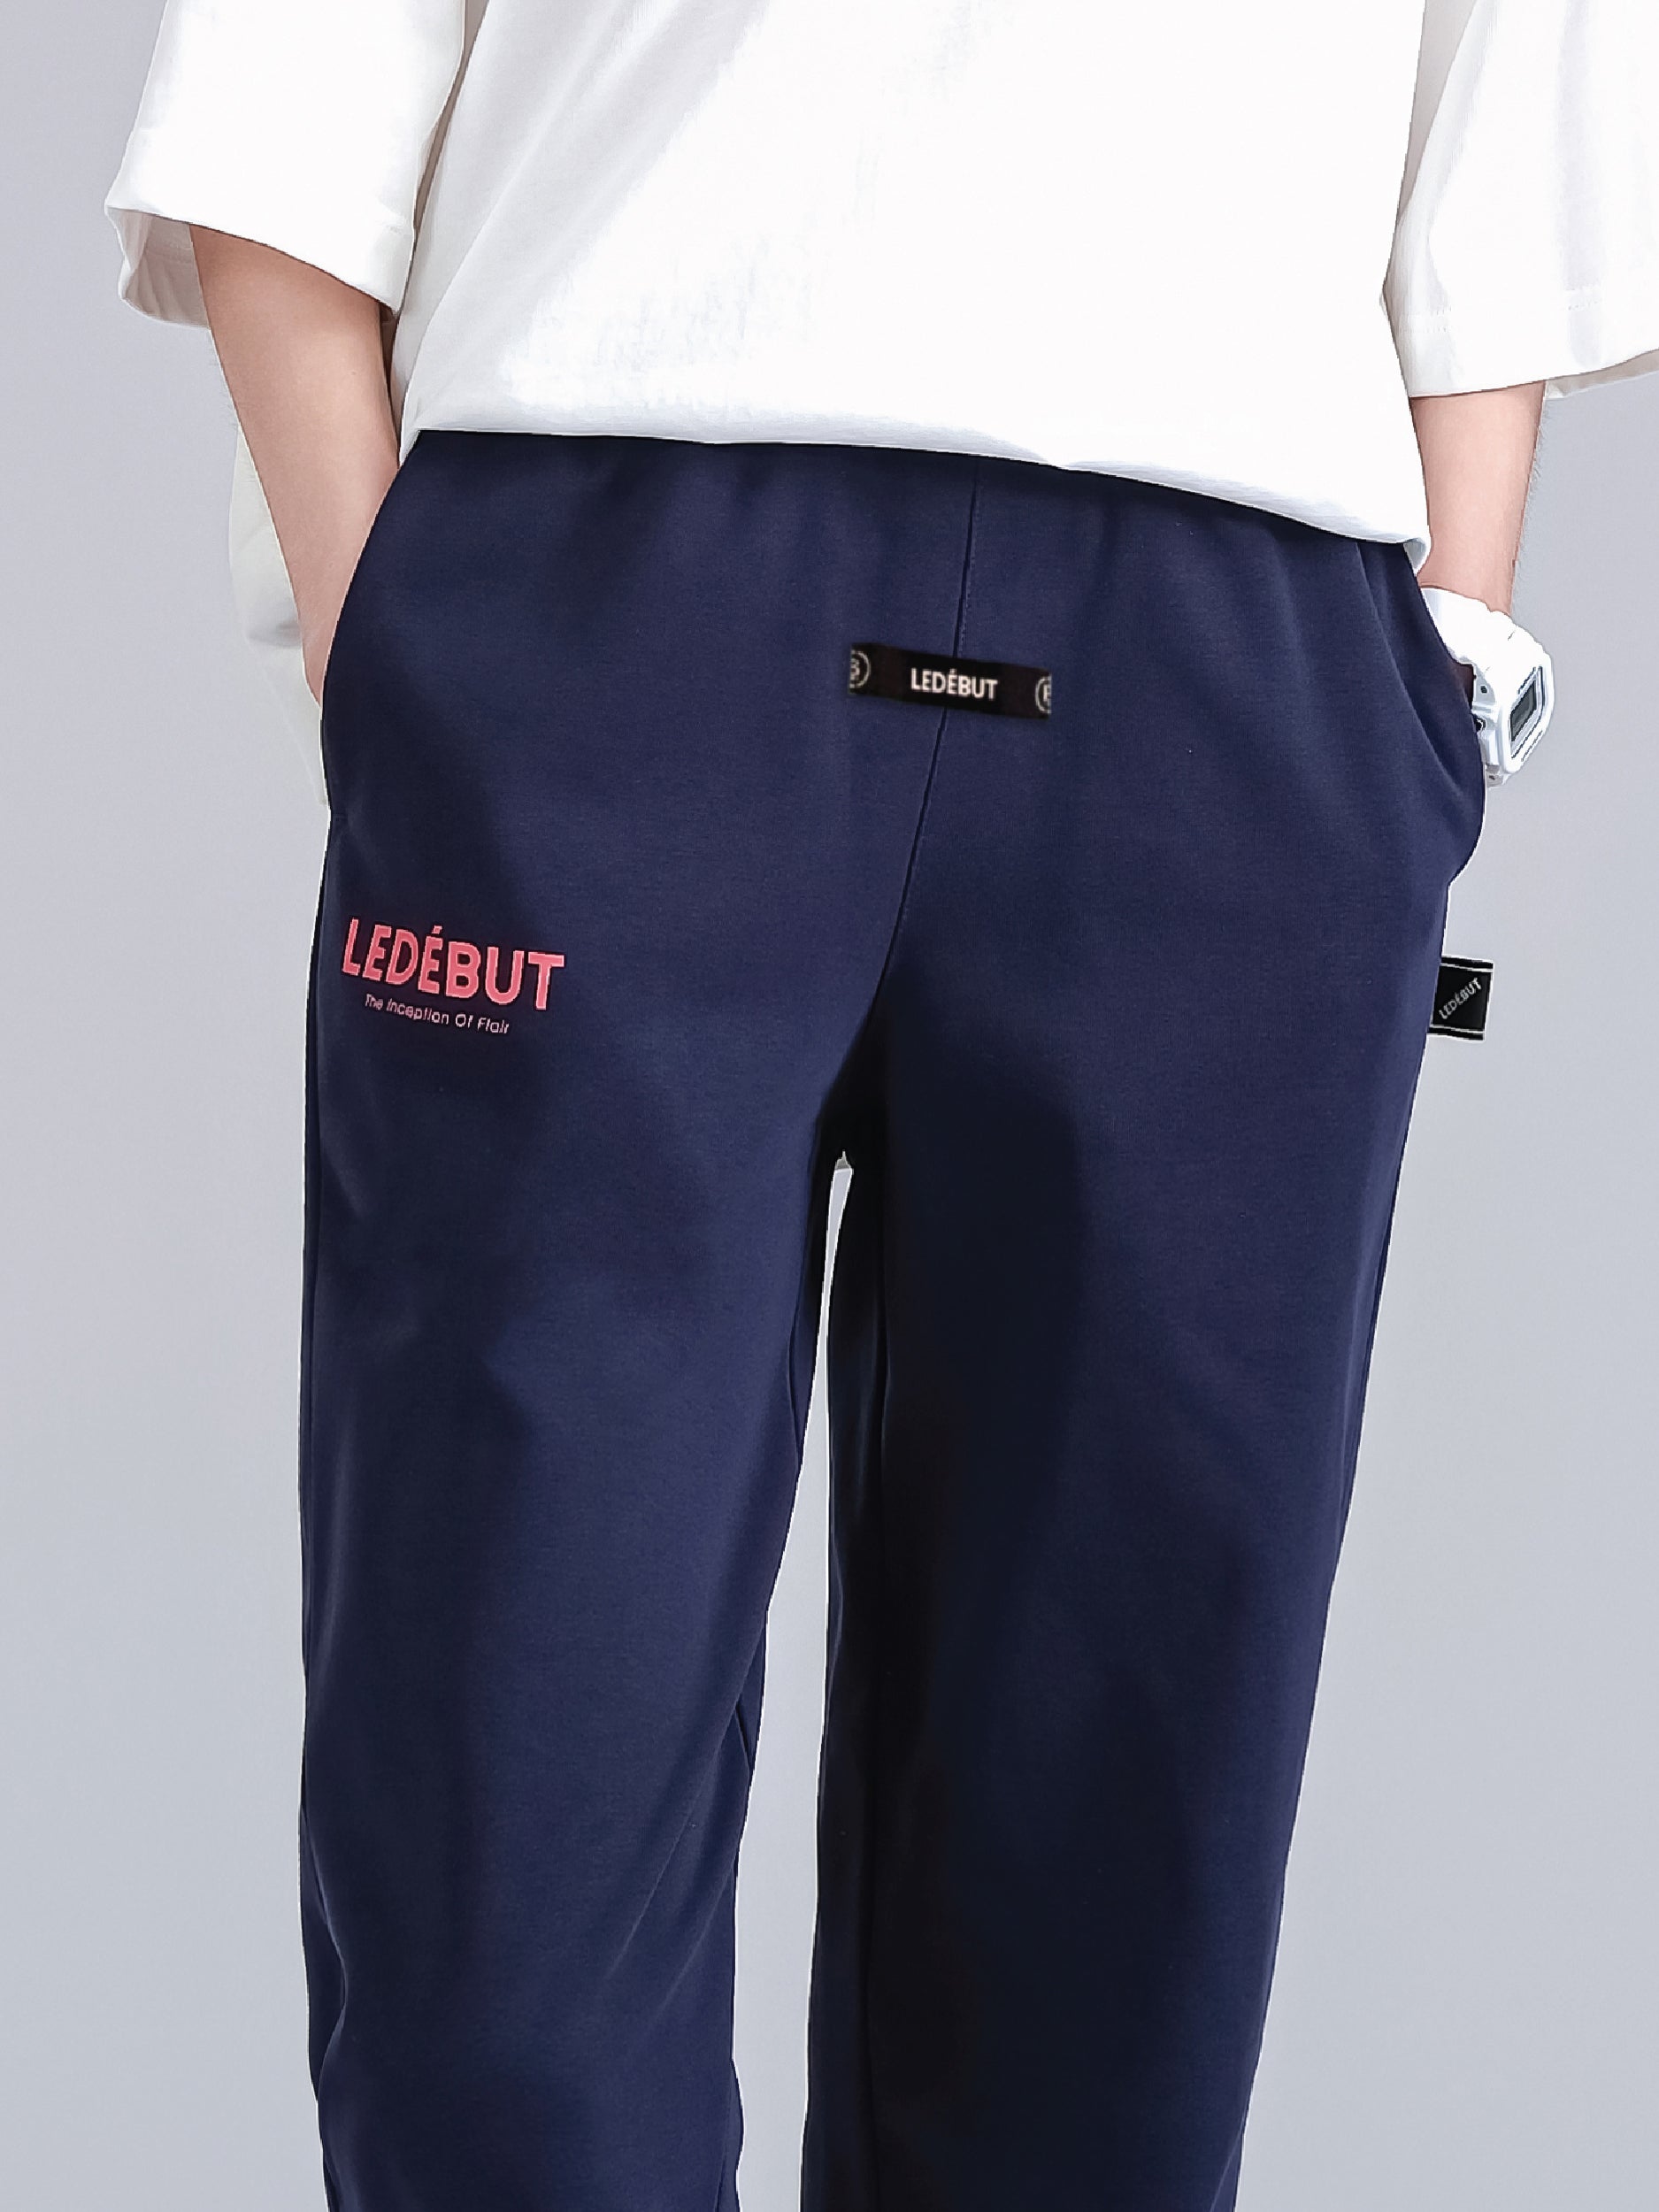 KaLI_store Men's Pants Mens Fashion Joggers Pants - Sweatpants Trousers  Cotton Cargo Pants Mens Long Pants Khaki,3XL - Walmart.com